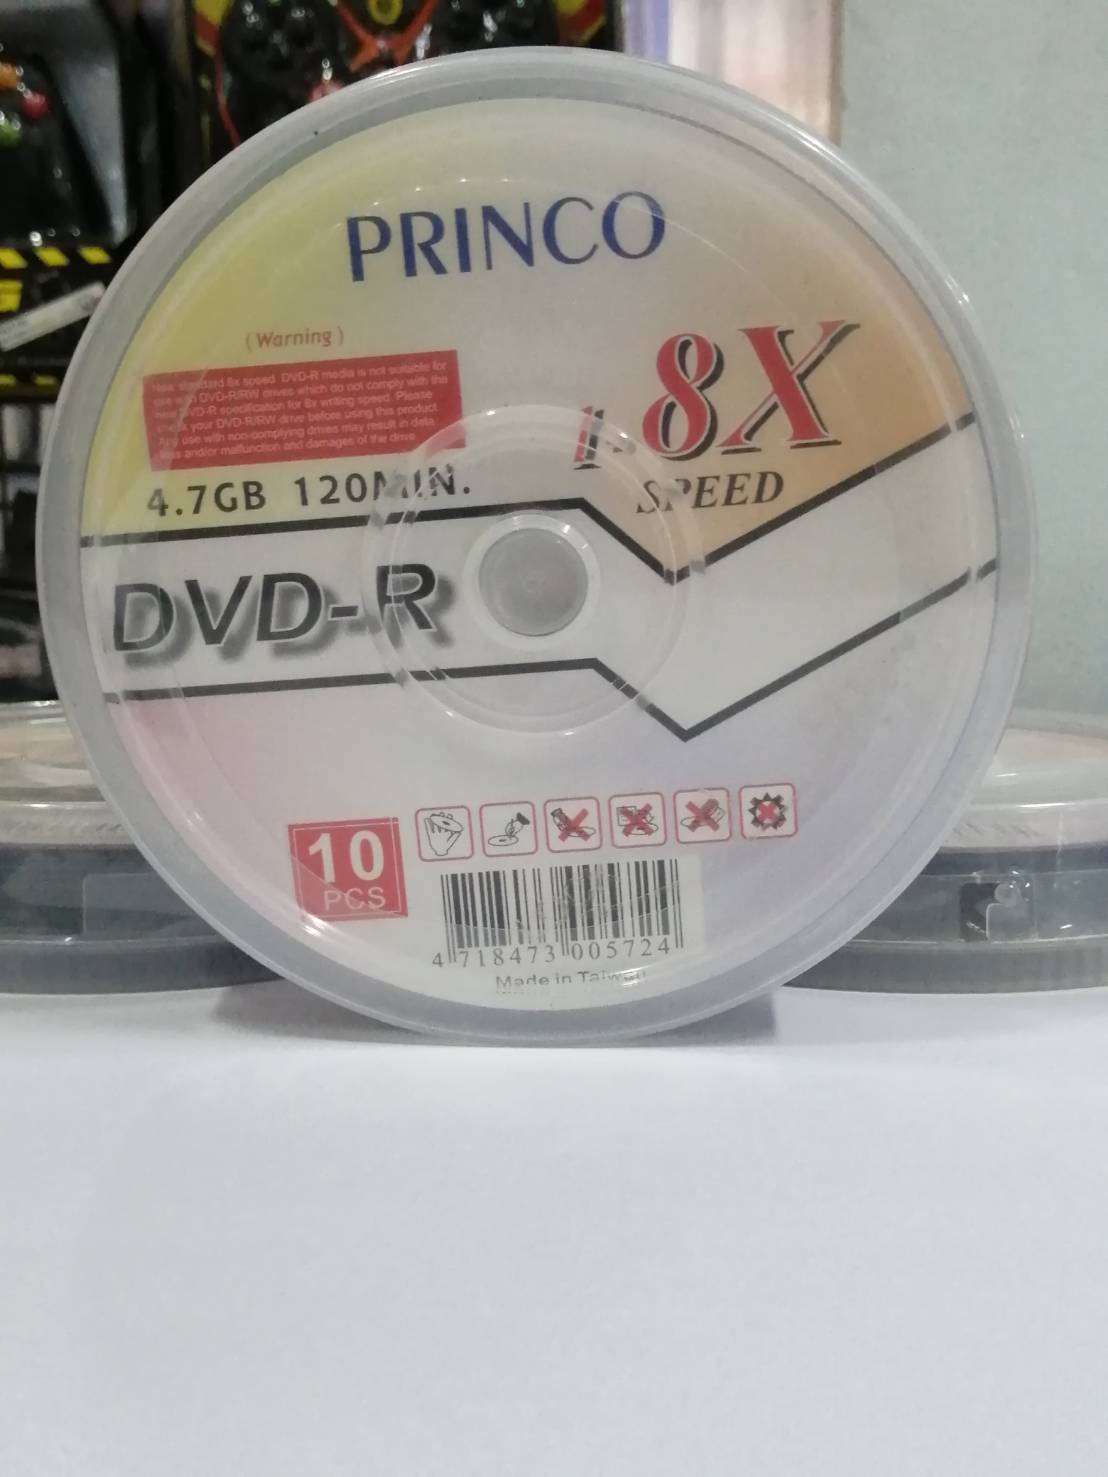 PRINCO DVD-R แผ่นดีวีดี 4.7GB 120Min Pack 10 แผ่น (แผ่นดีวีดีสกรีนไม่ได้)